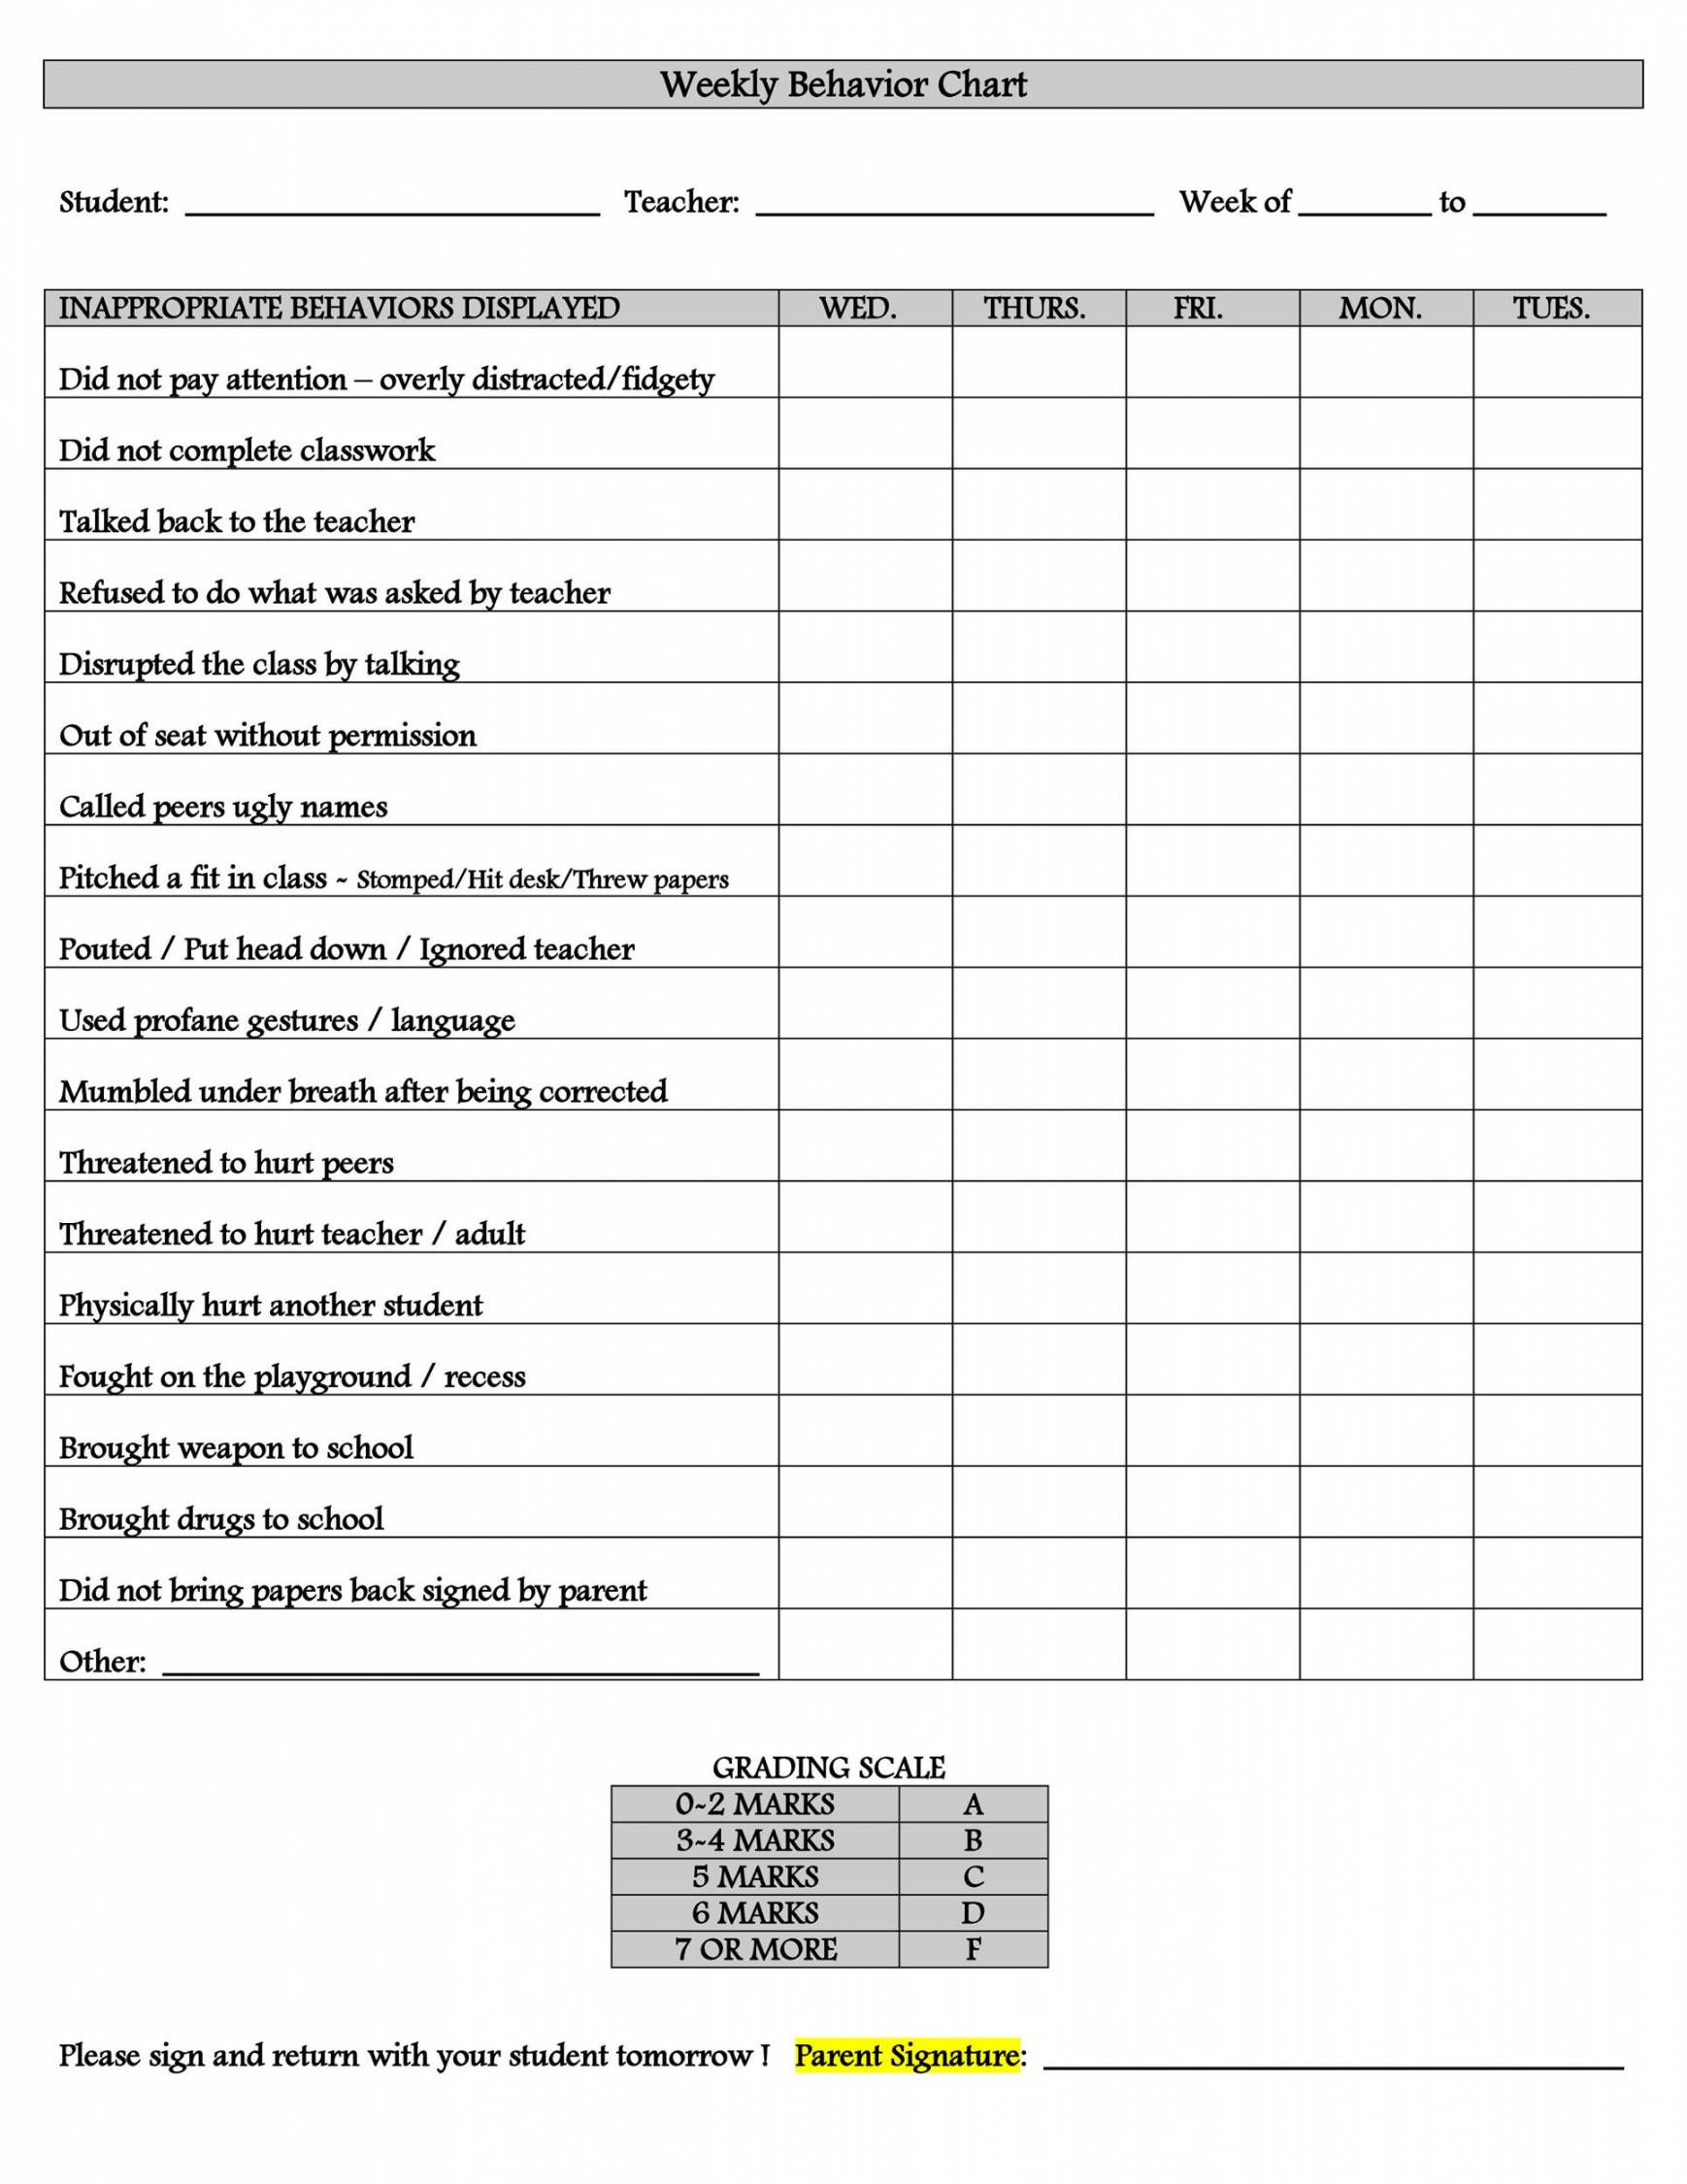 Free Printable Daily Behavior Charts - Printable -  Printable Behavior Chart Templates [for Kids] ᐅ TemplateLab